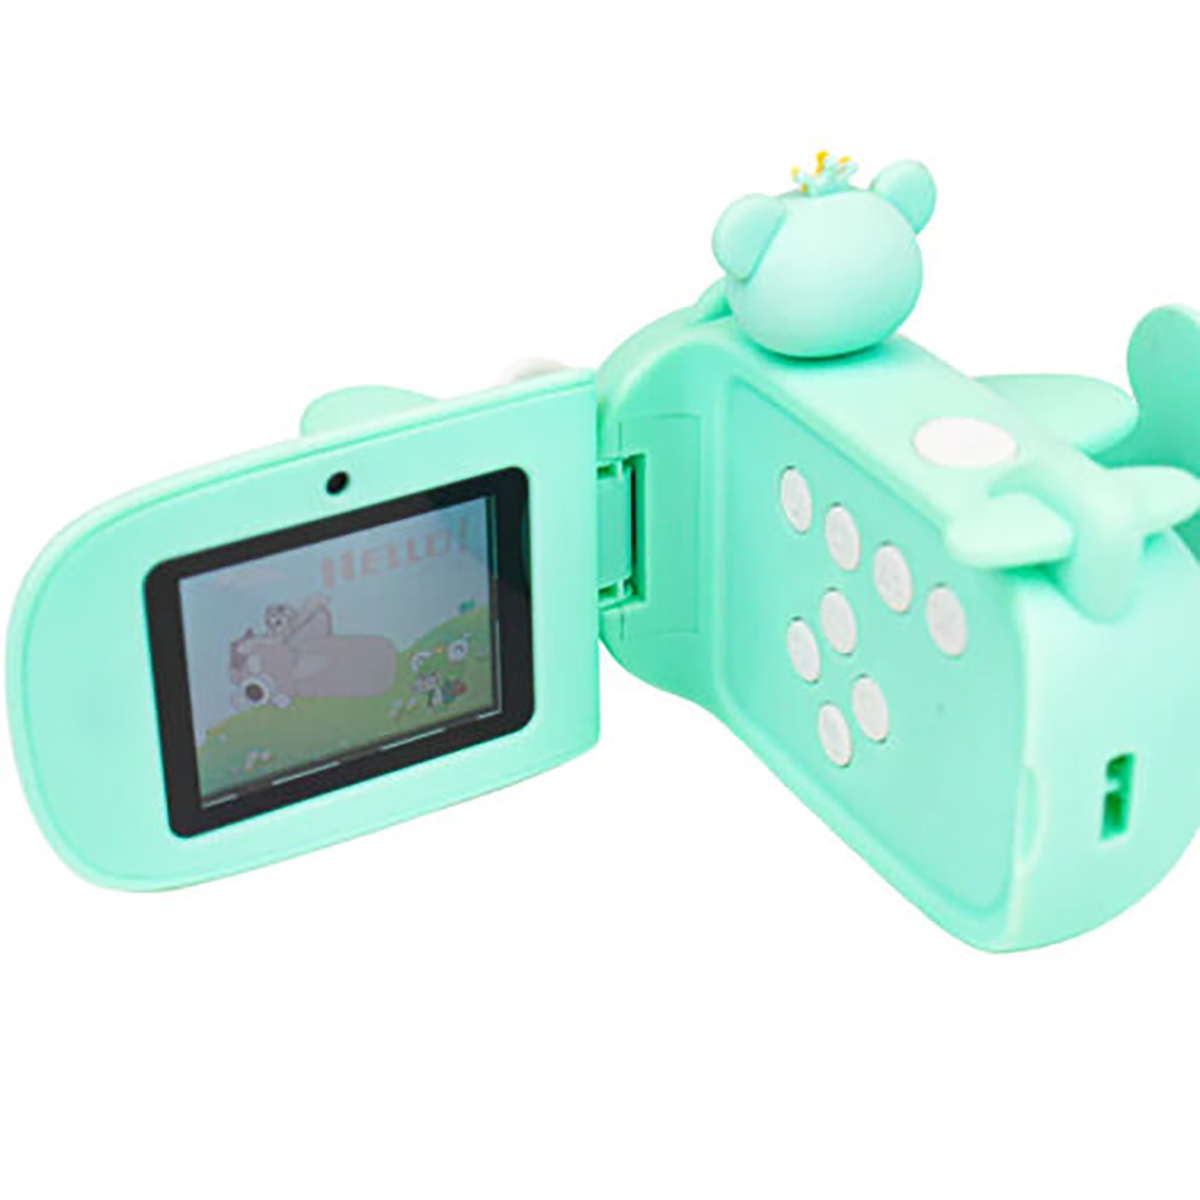 Spielzeug grüner SD mit U-Boot 50MP Digitalkamera Kinder LIFE Karte 32GB FINE PRO Kinderkamera 1080p